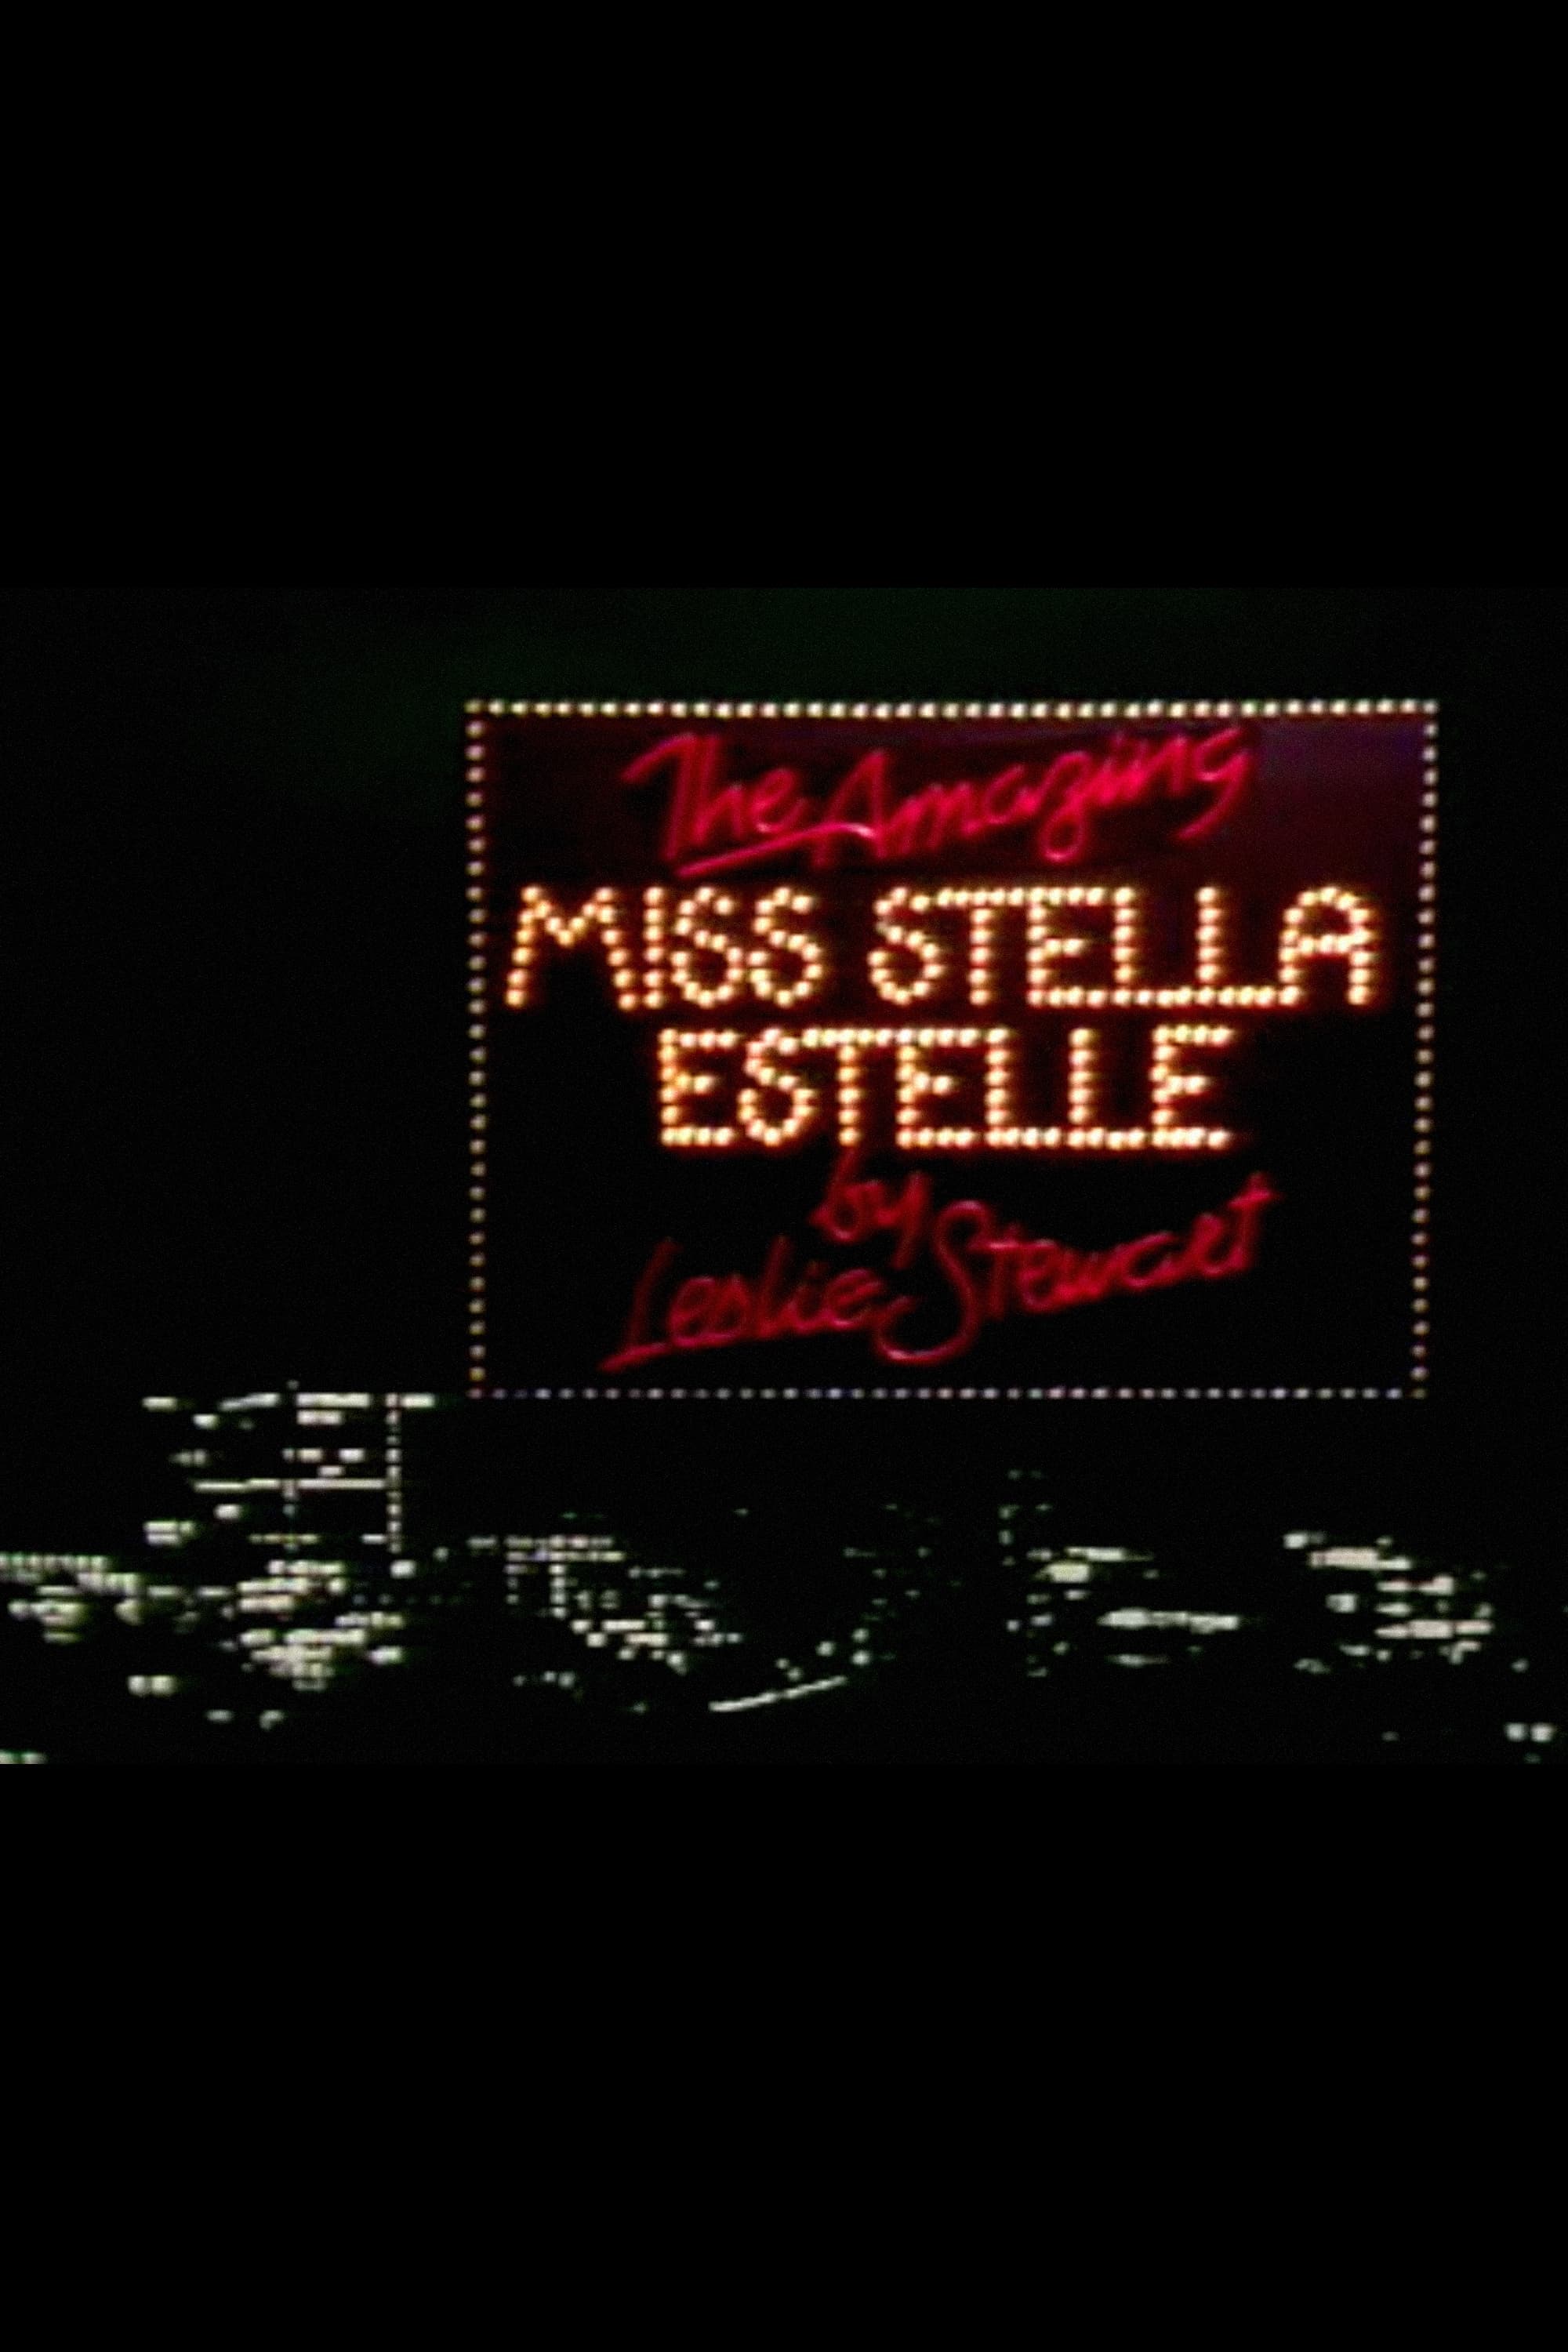 The Amazing Miss Stella Estelle